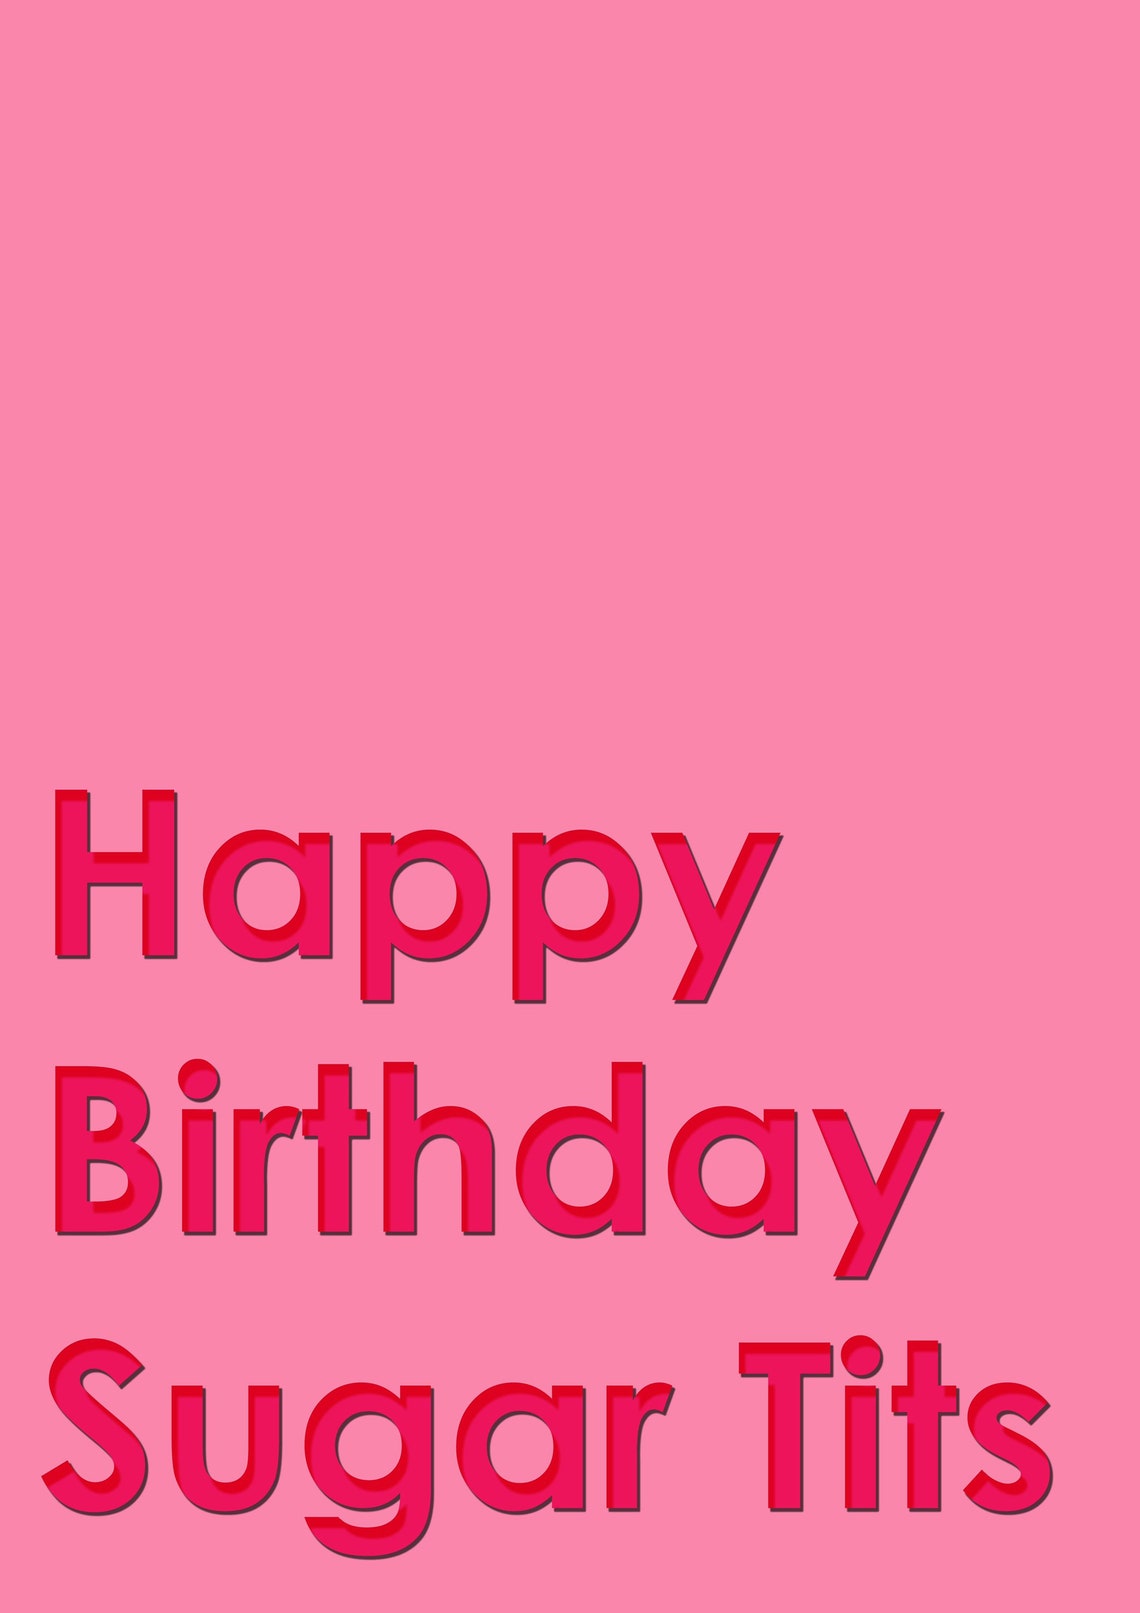 Happy Birthday Sugar Tits Greetings Card Positive Card Etsy